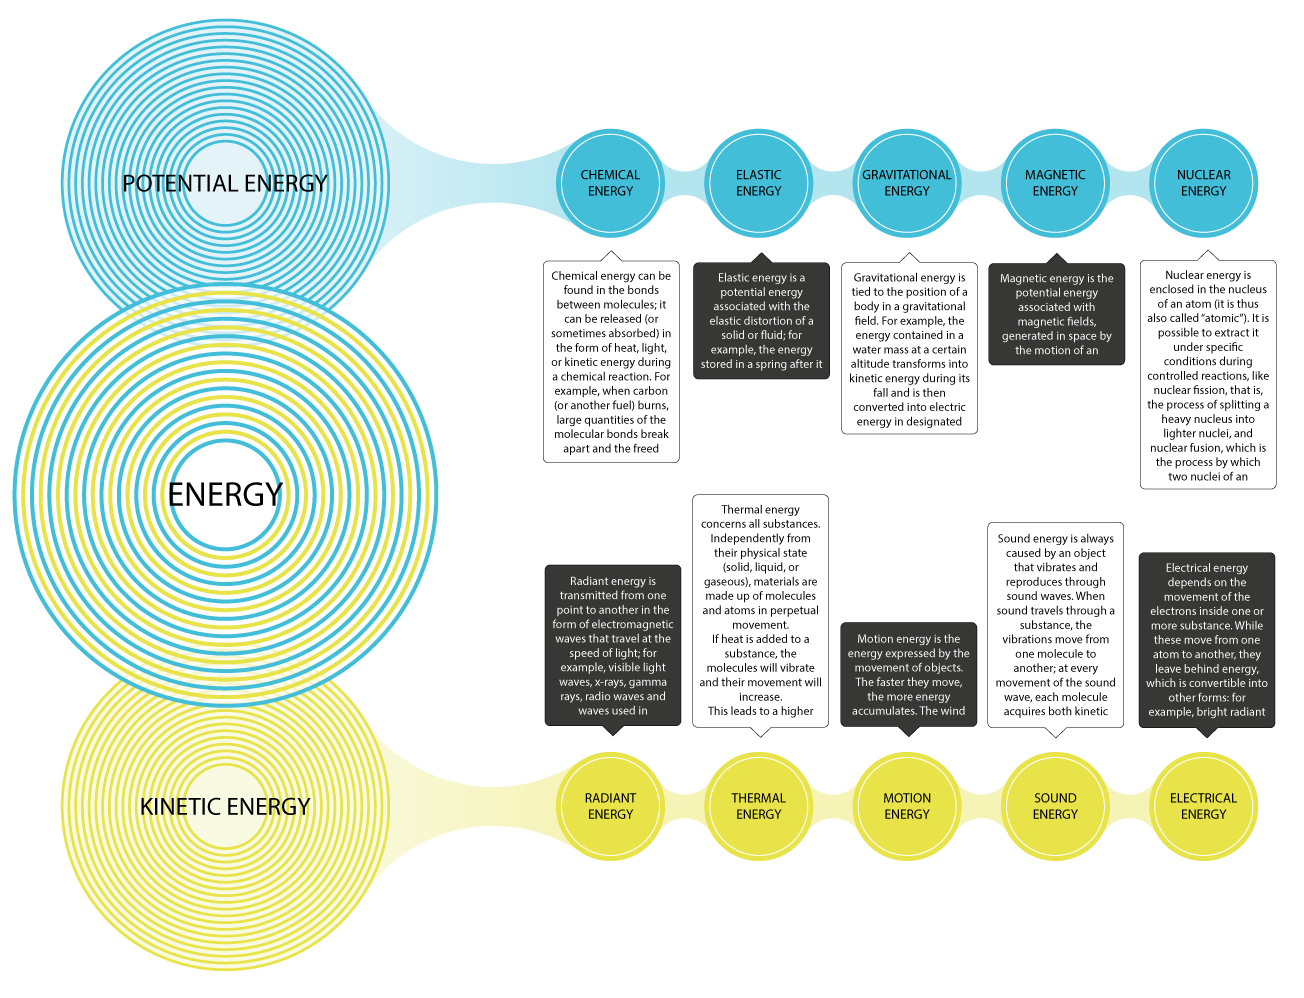 Energy overview schema image